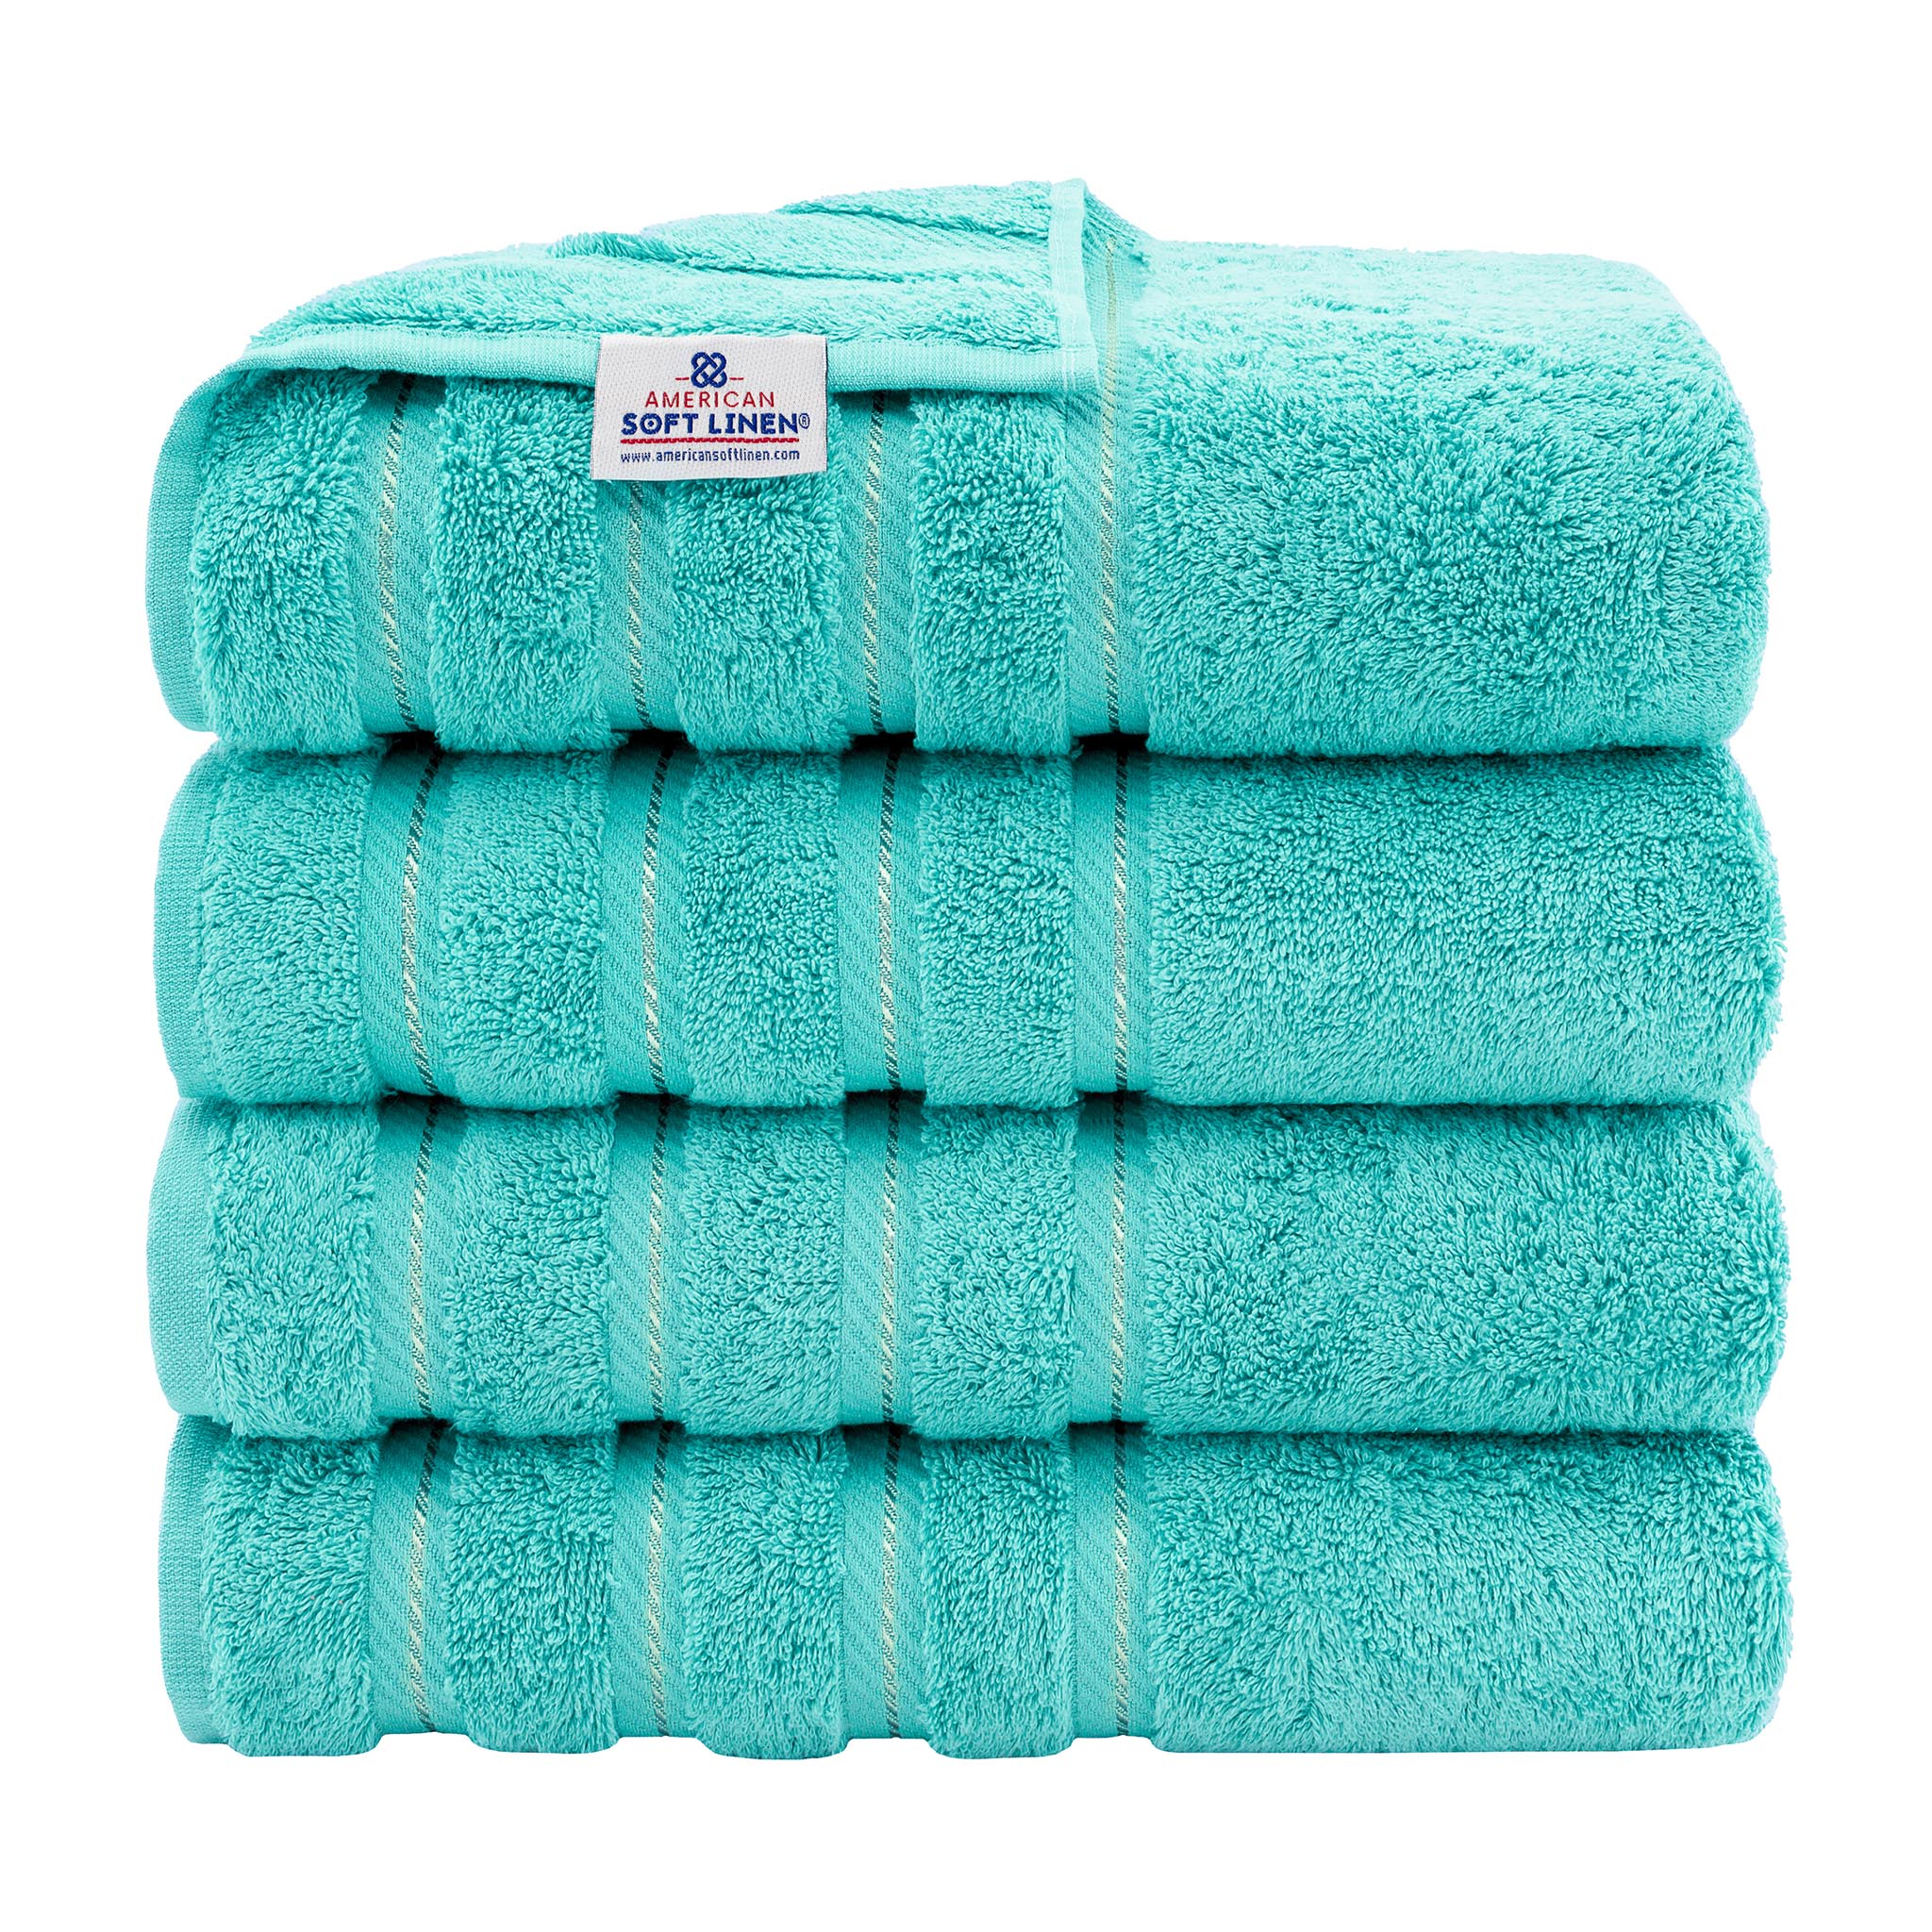 American Soft Linen 100% Turkish Cotton 4 Pack Bath Towel Set turquoise-blue-1